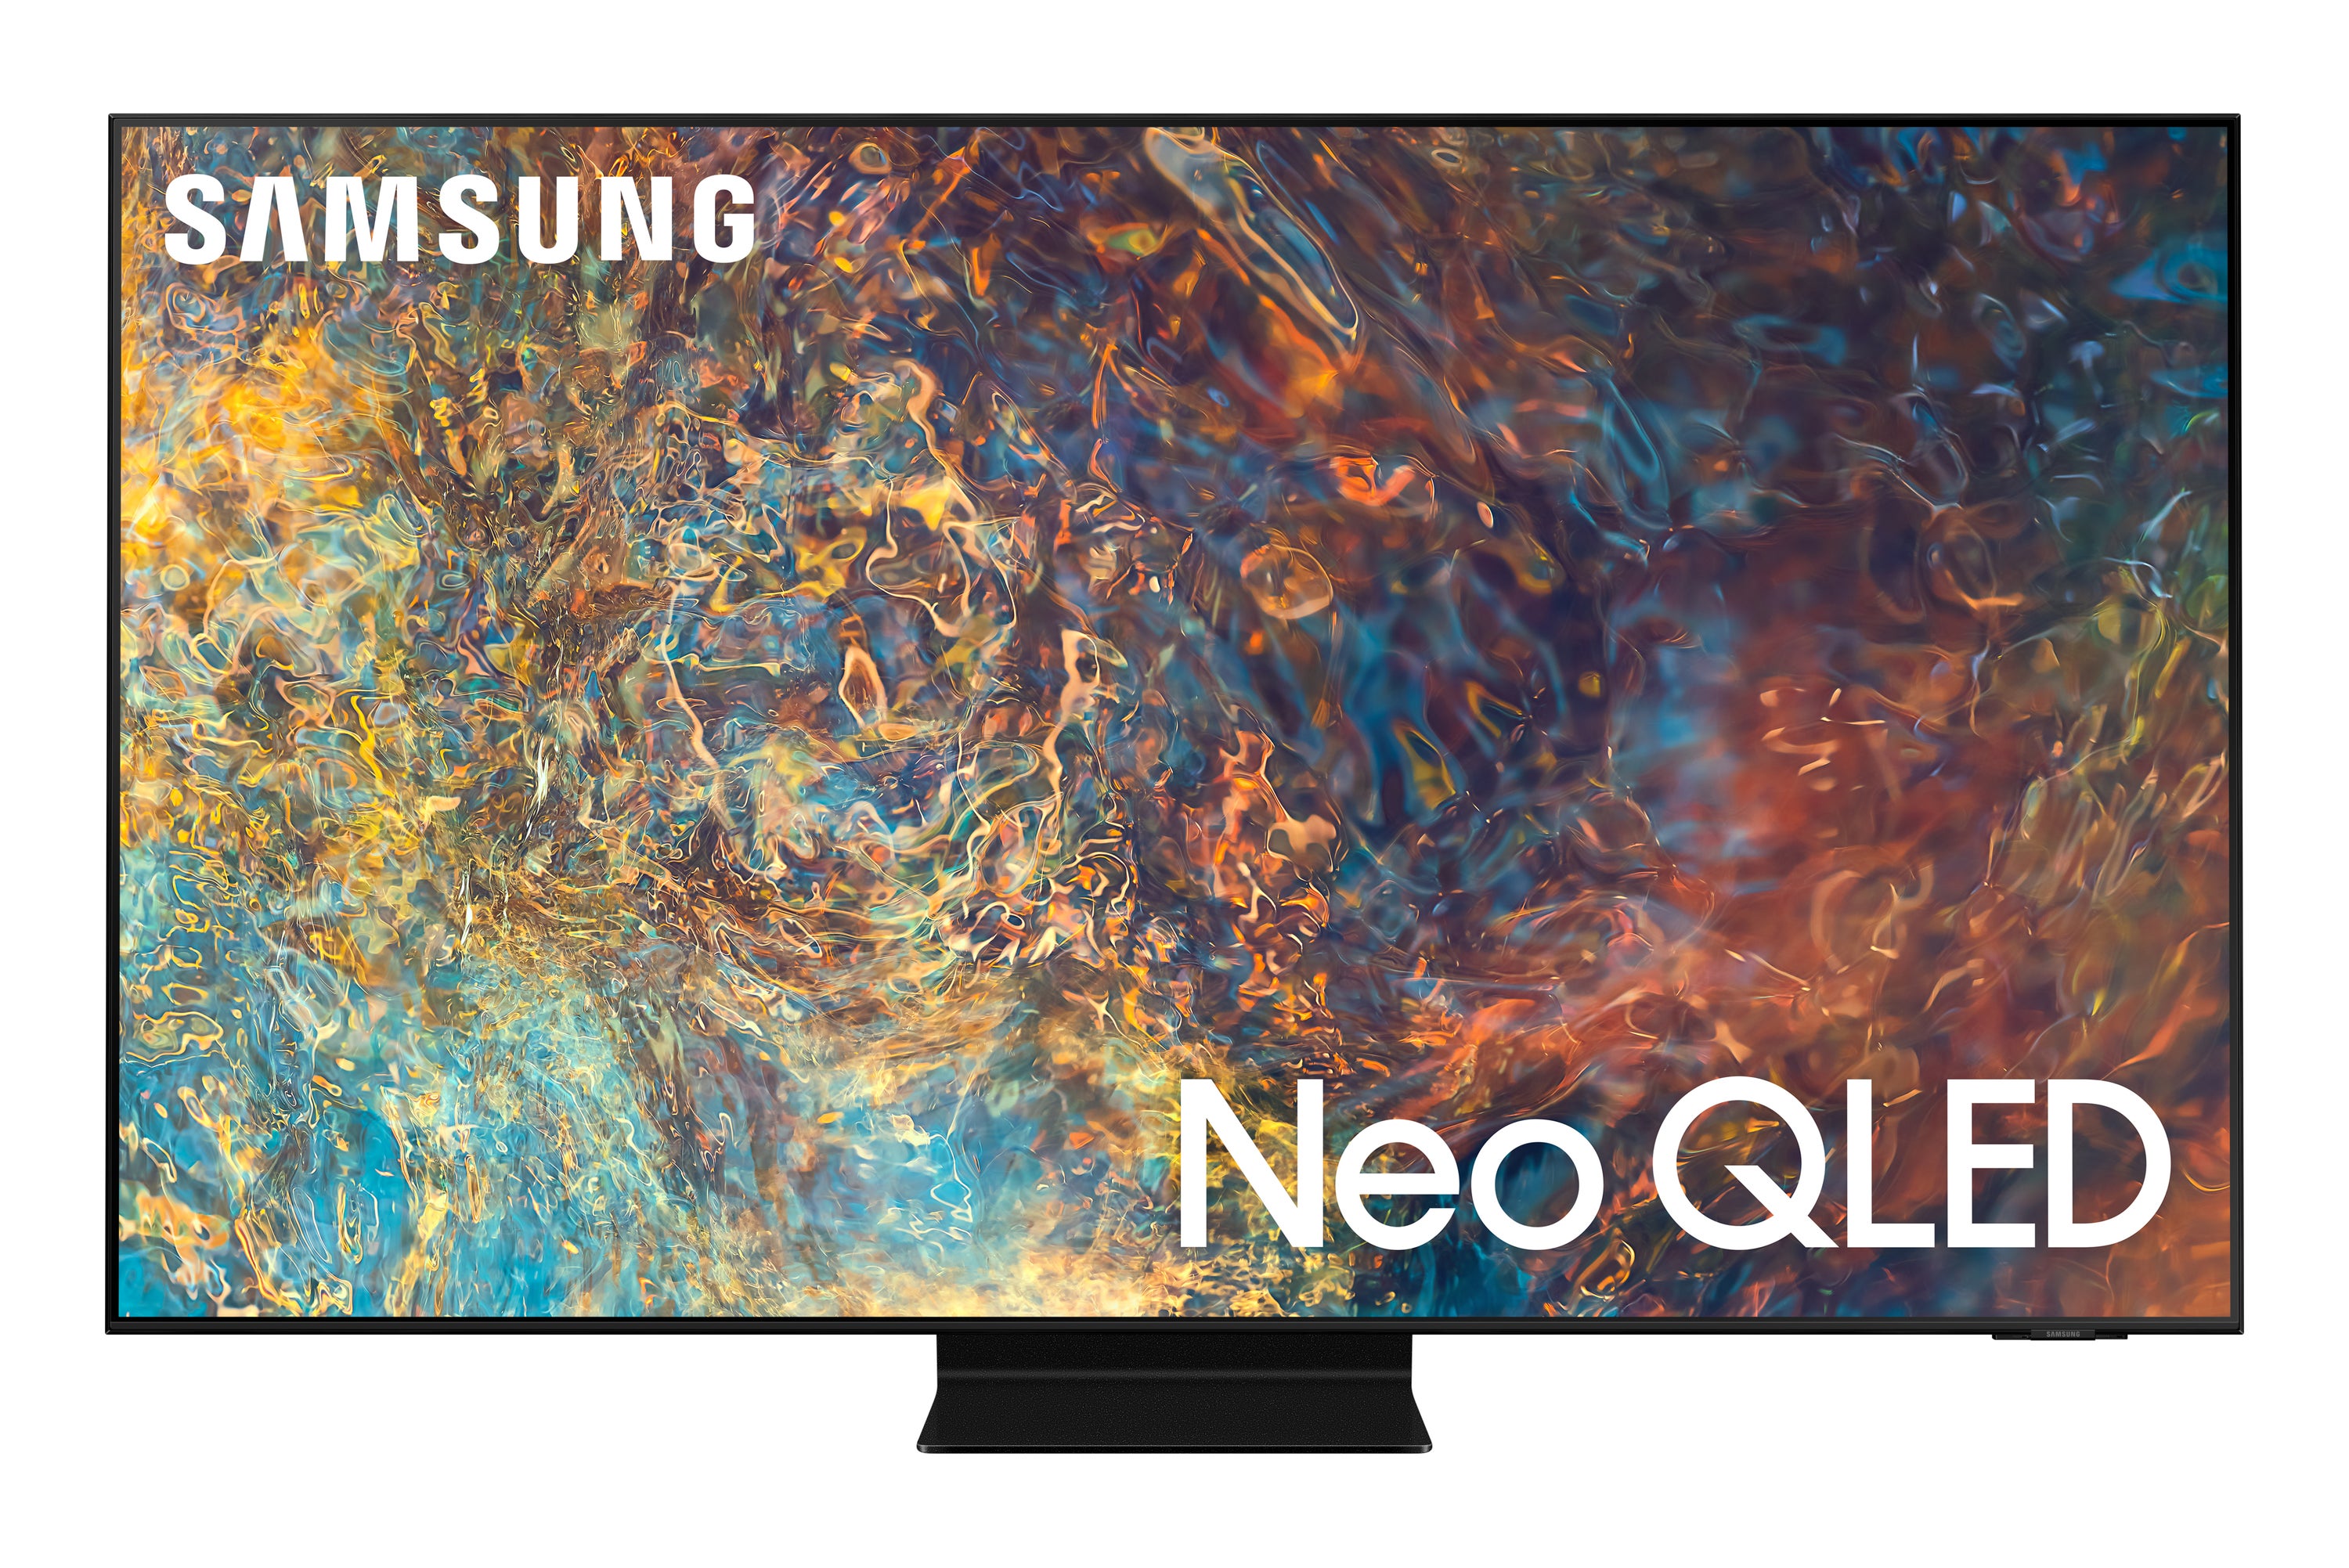 SAMSUNG 85" Class Neo QLED 4K (2160P) LED Smart TV QN85QN90 2021 - image 1 of 10